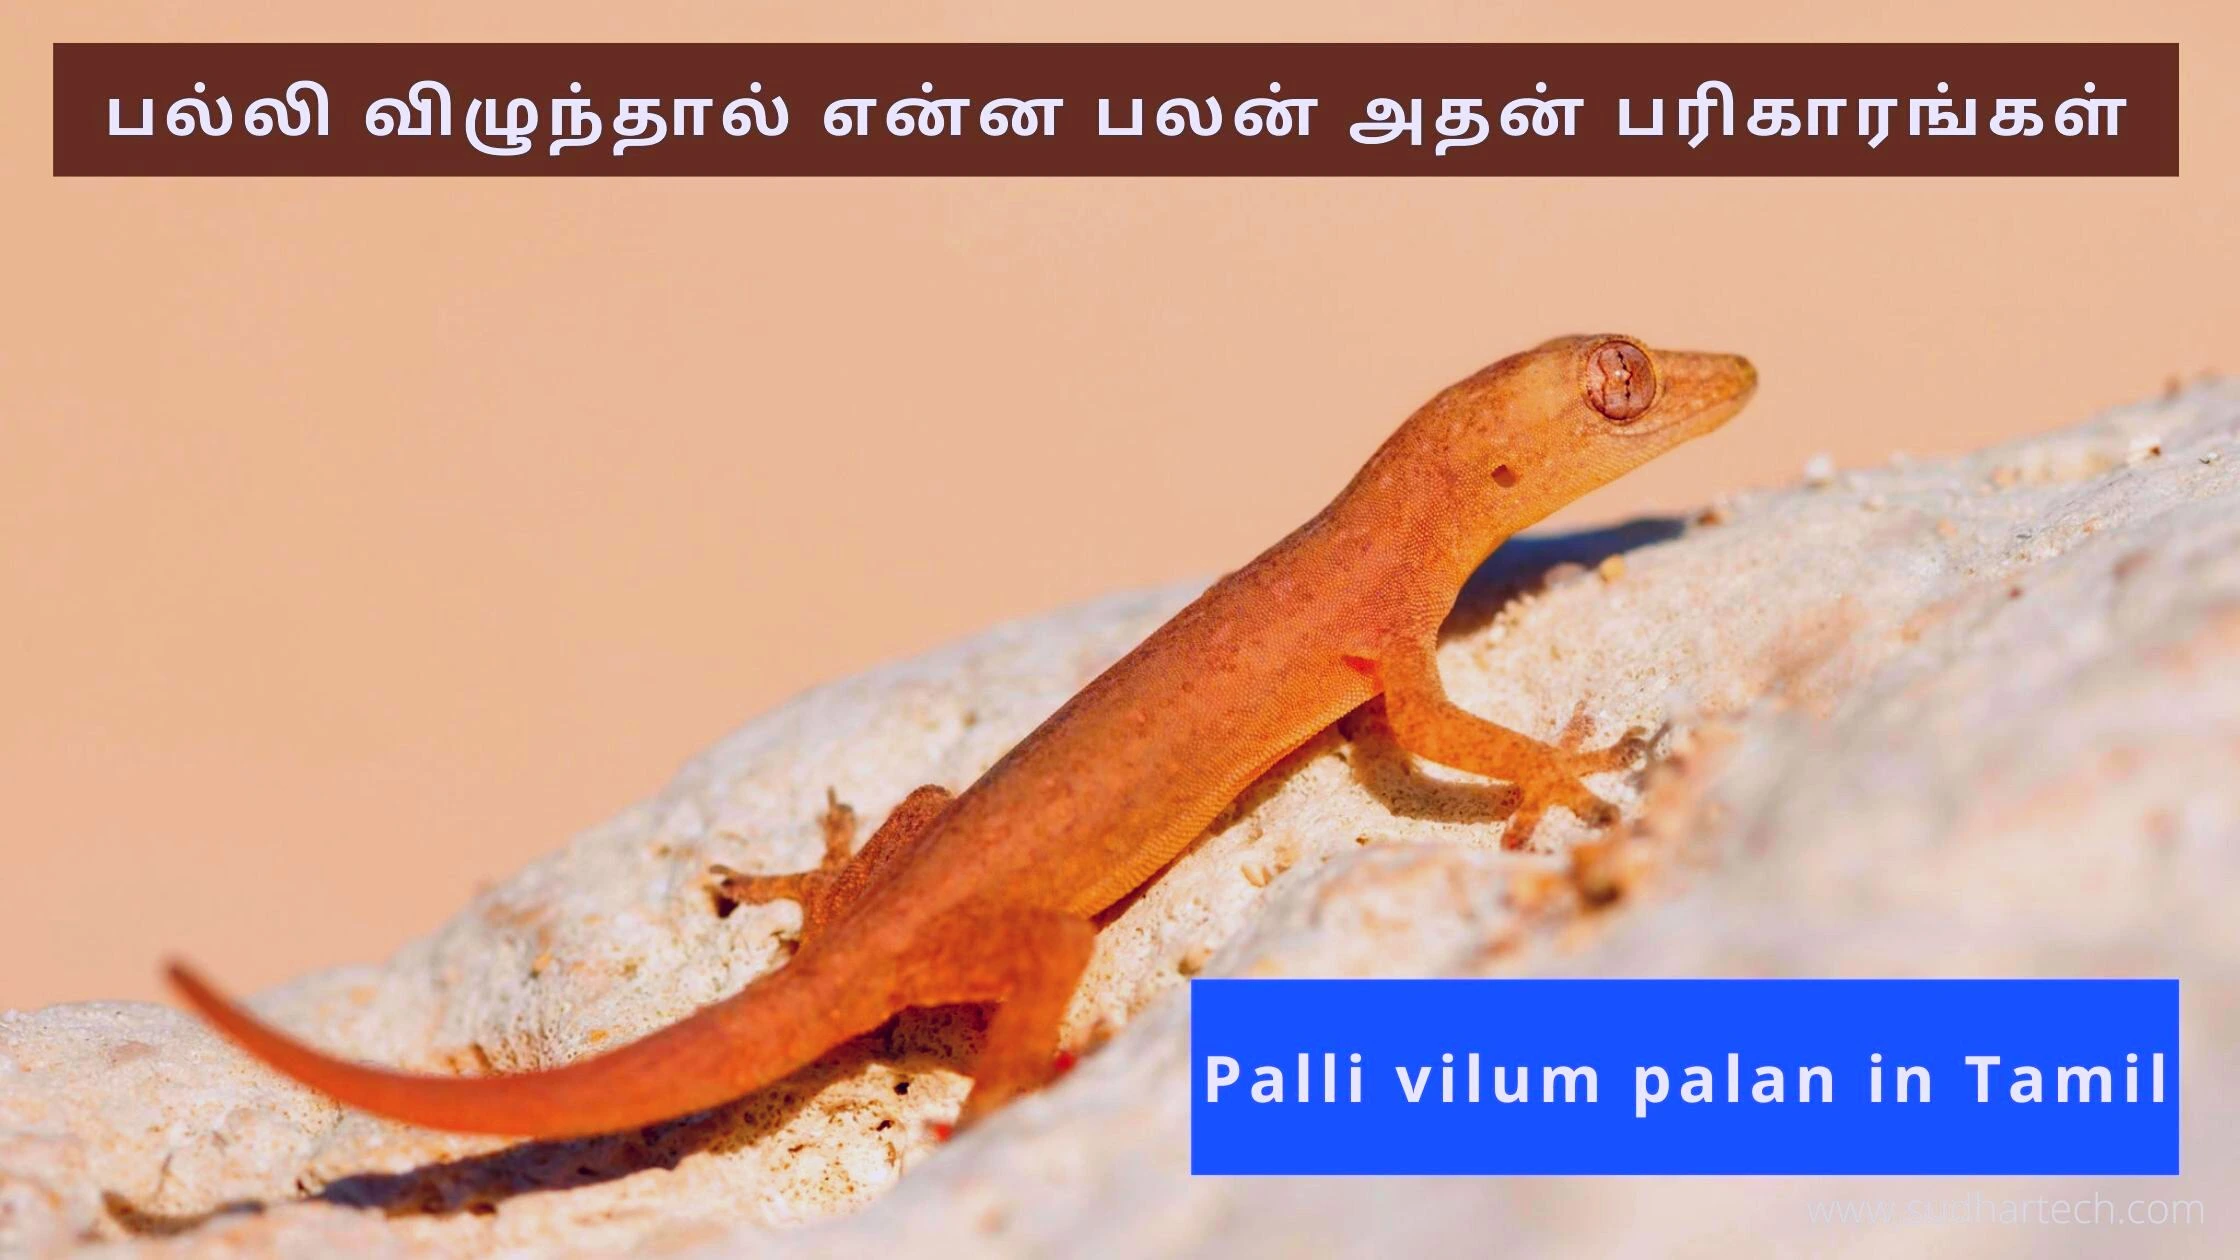 Palli vilum palan in Tamil